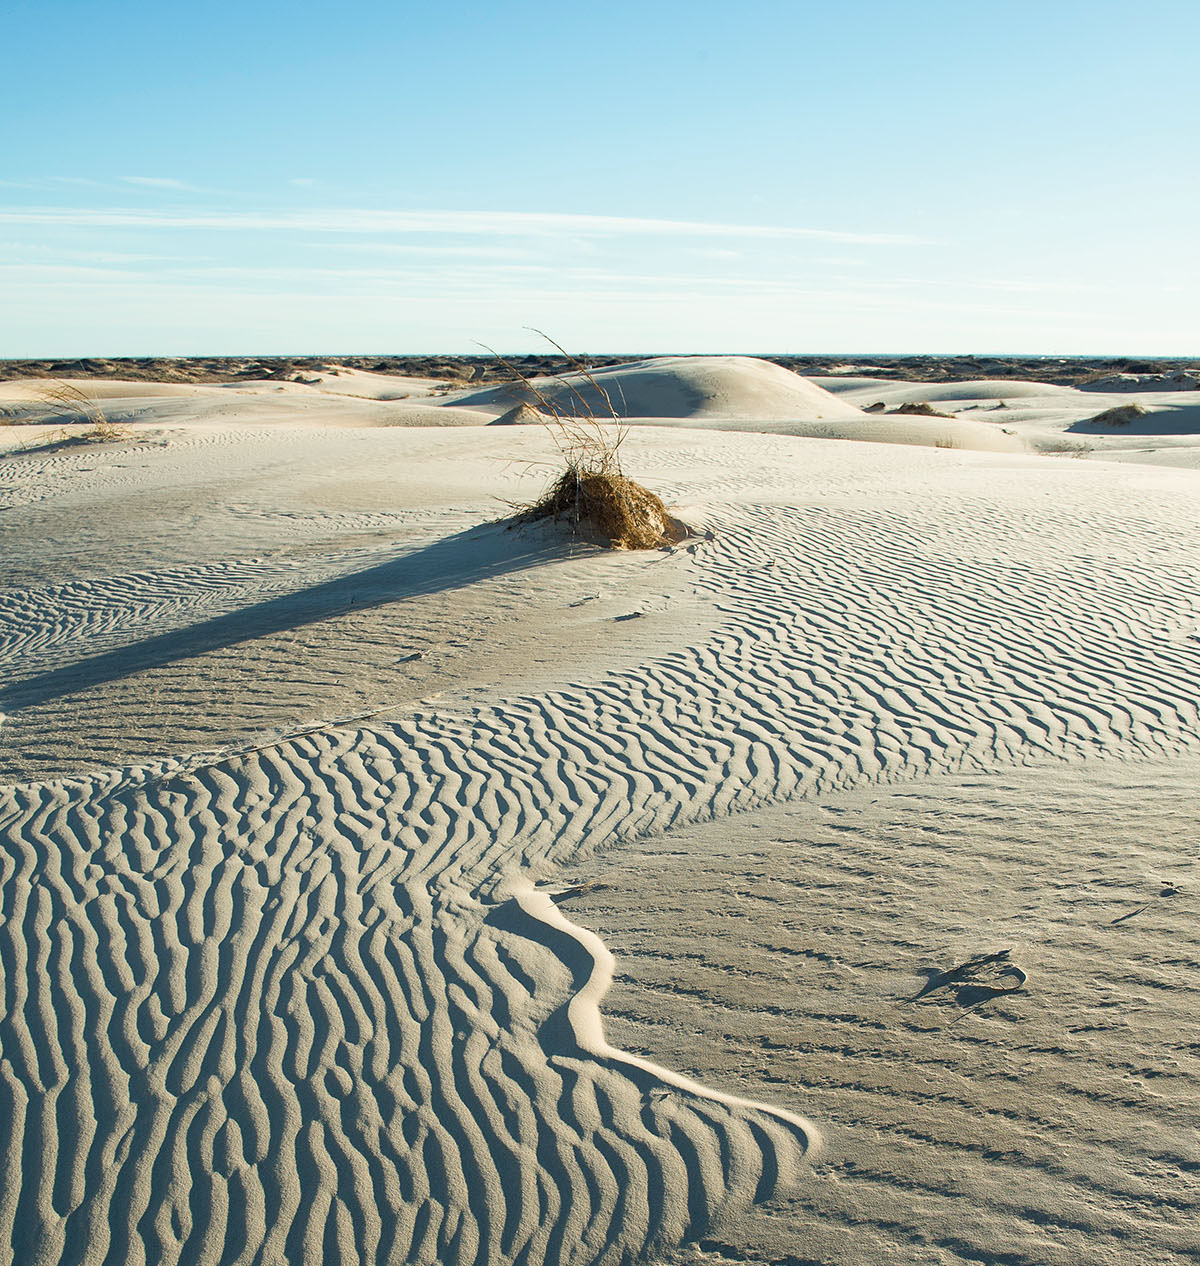 https://texashighways.com/wp-content/uploads/2022/12/drive-atlas-sand-monahans.jpg